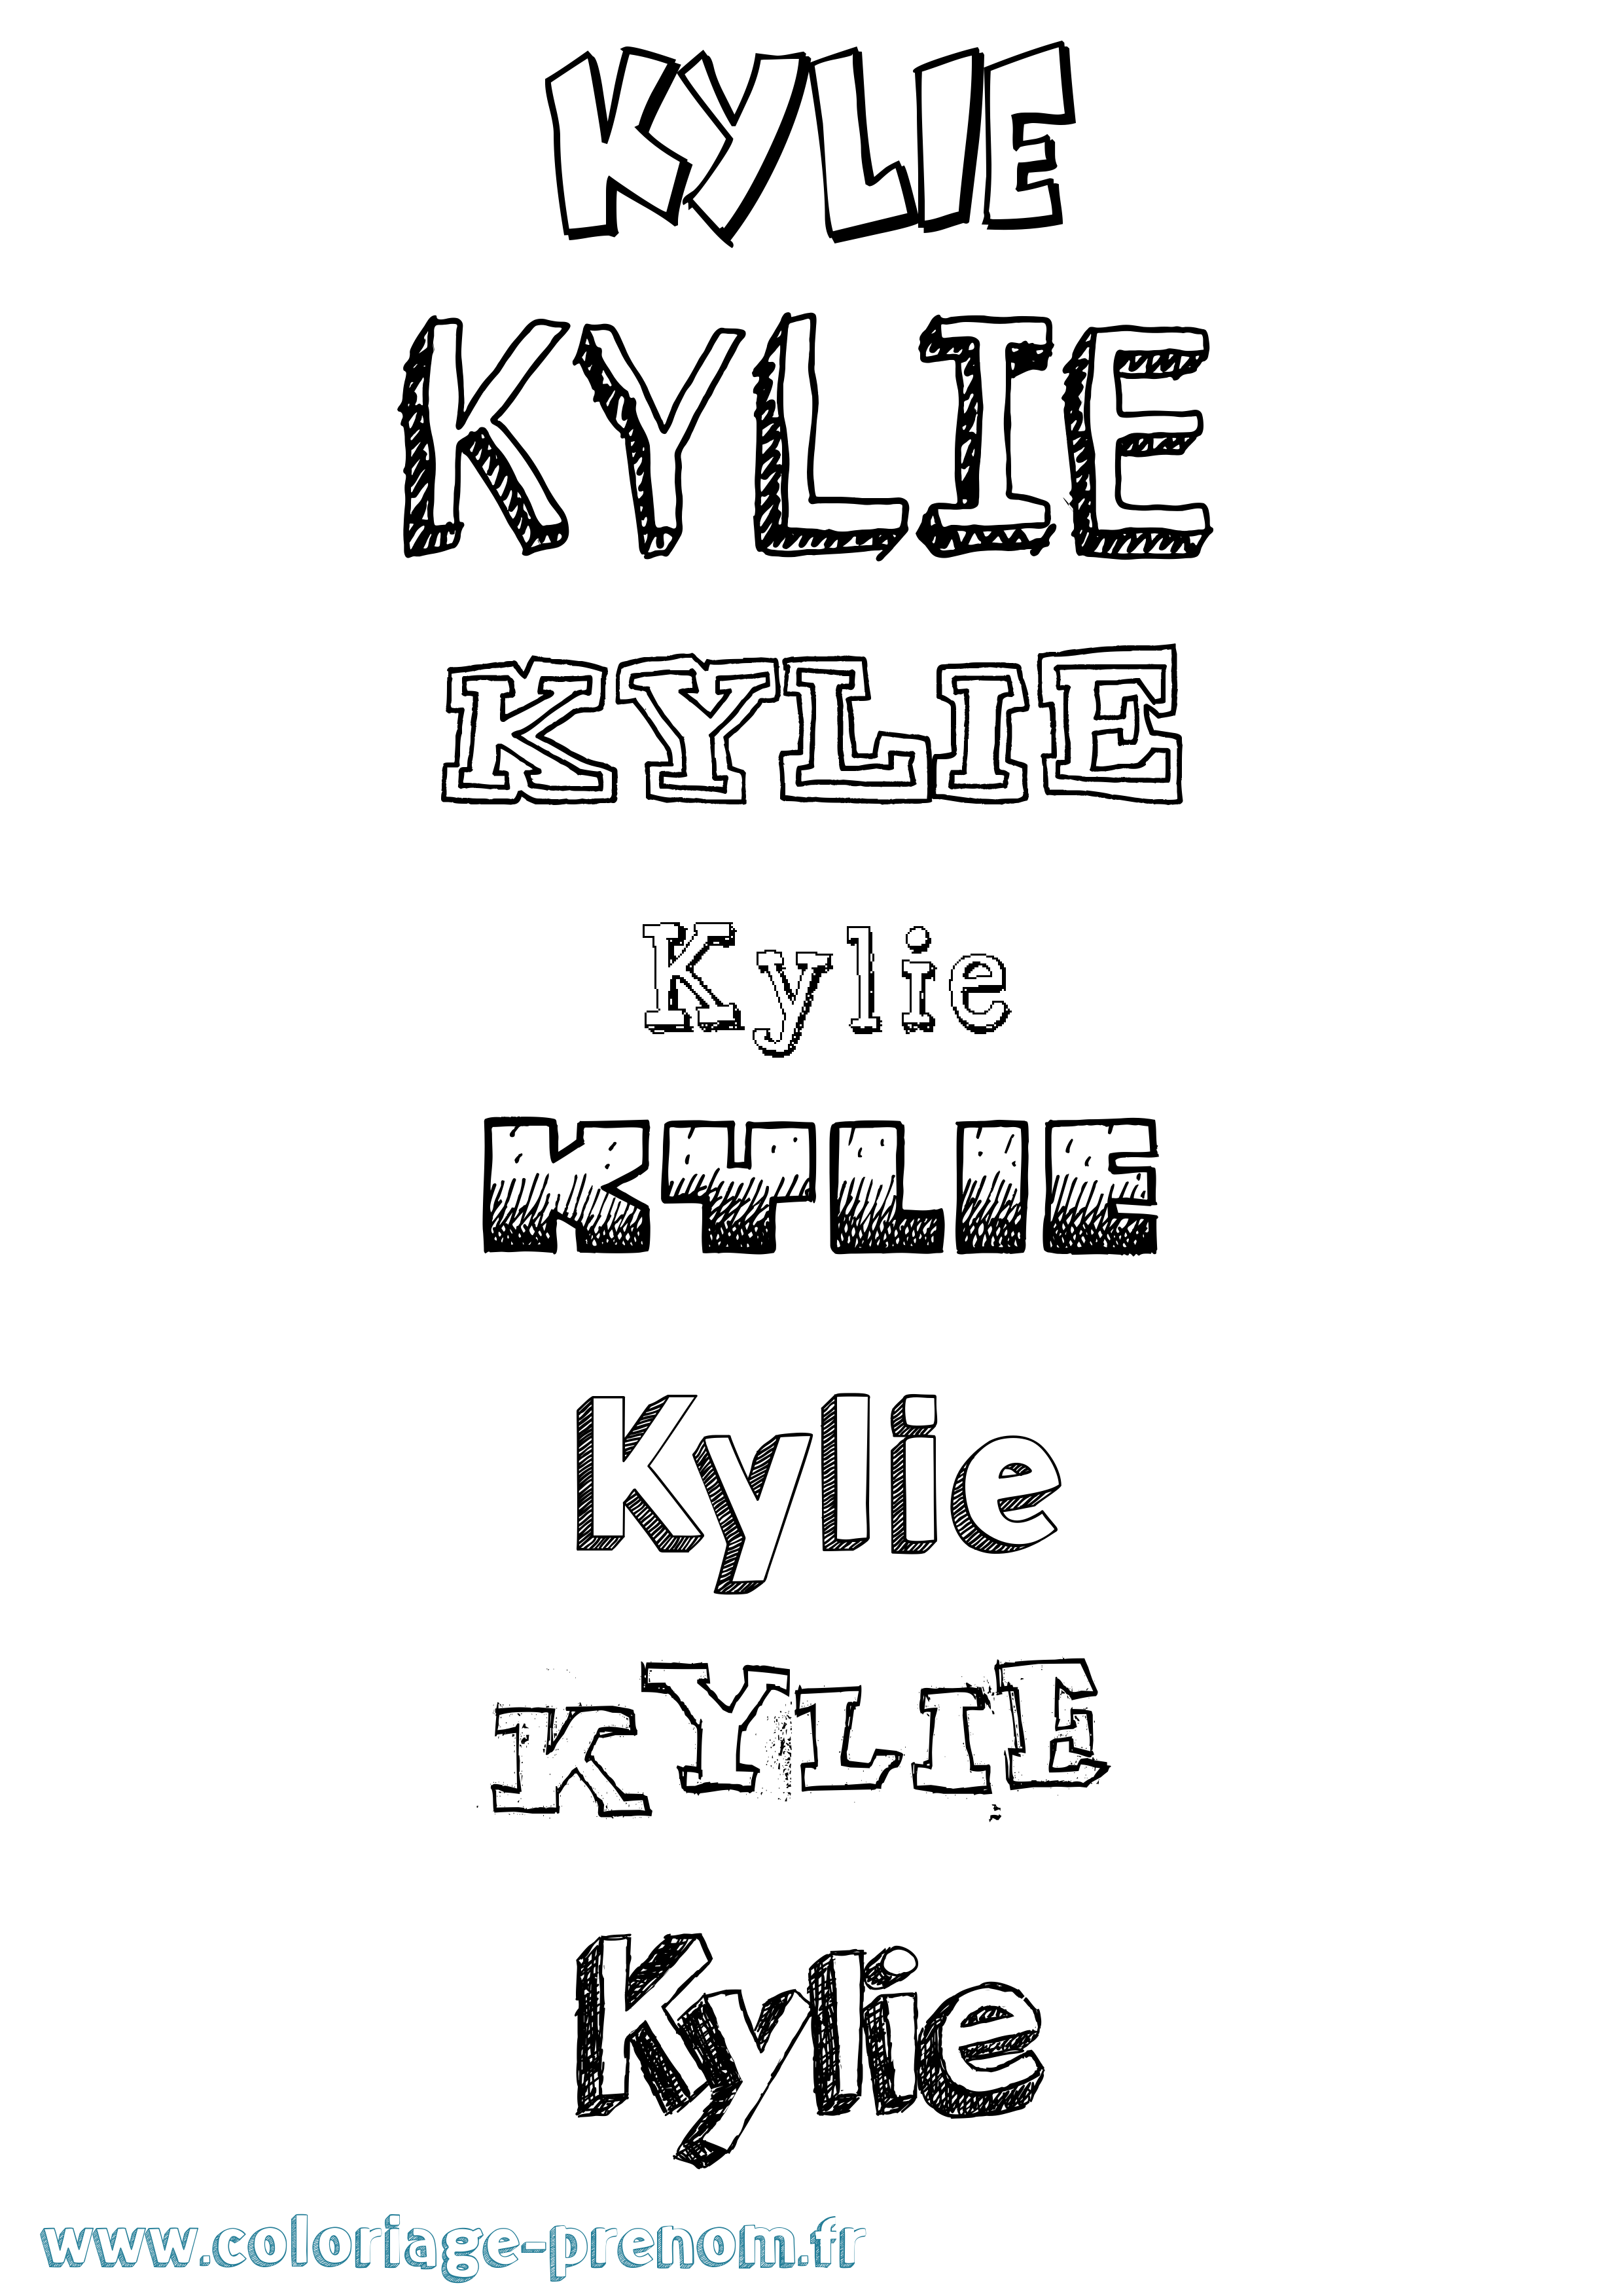 Coloriage prénom Kylie Dessiné